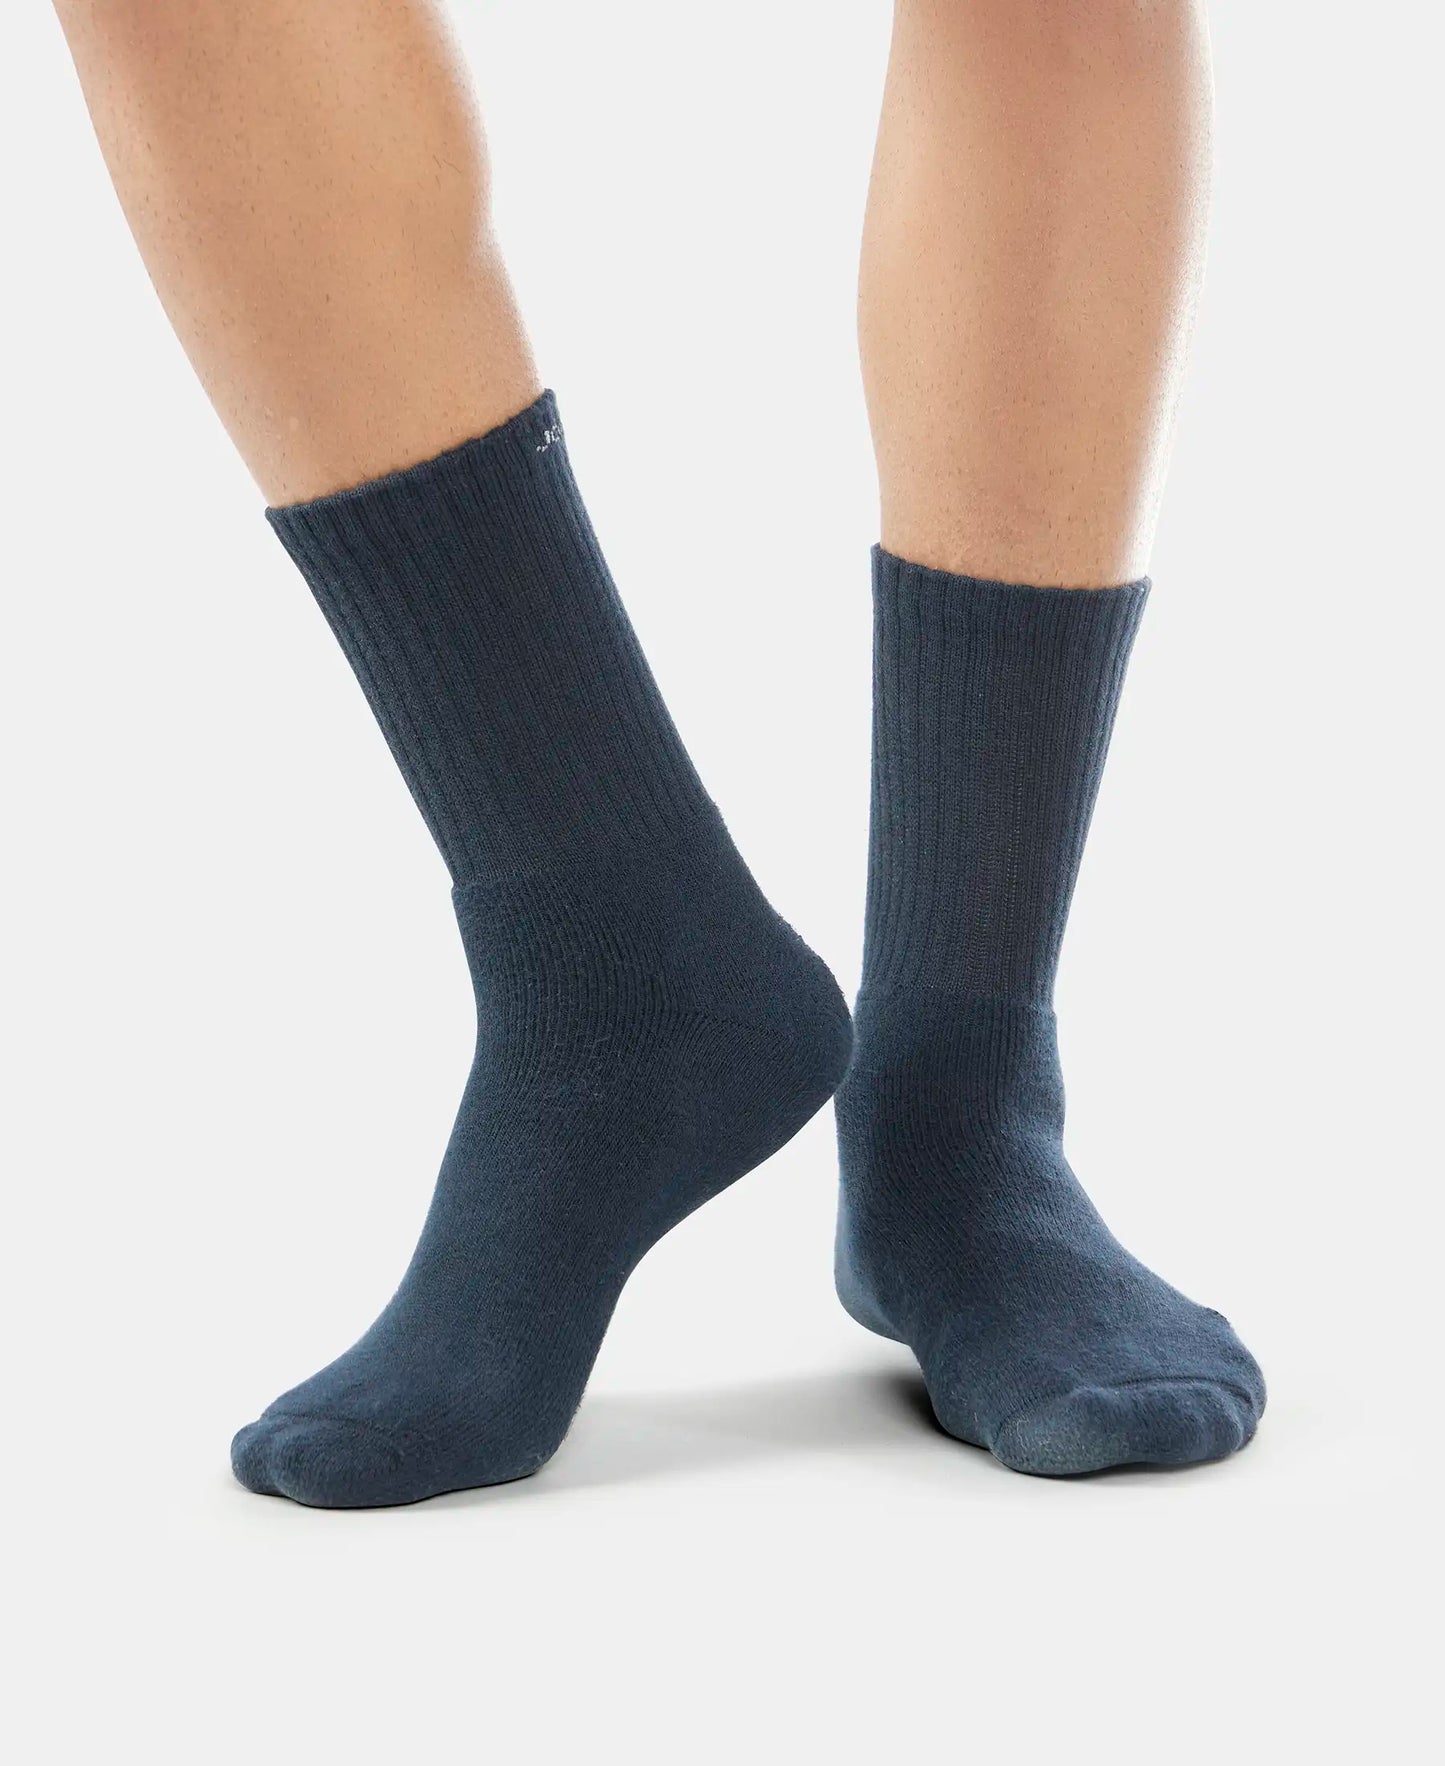 Compact Cotton Terry Crew Length Socks With StayFresh Treatment - Black/Midgrey Melange/Charcoal Melange-5